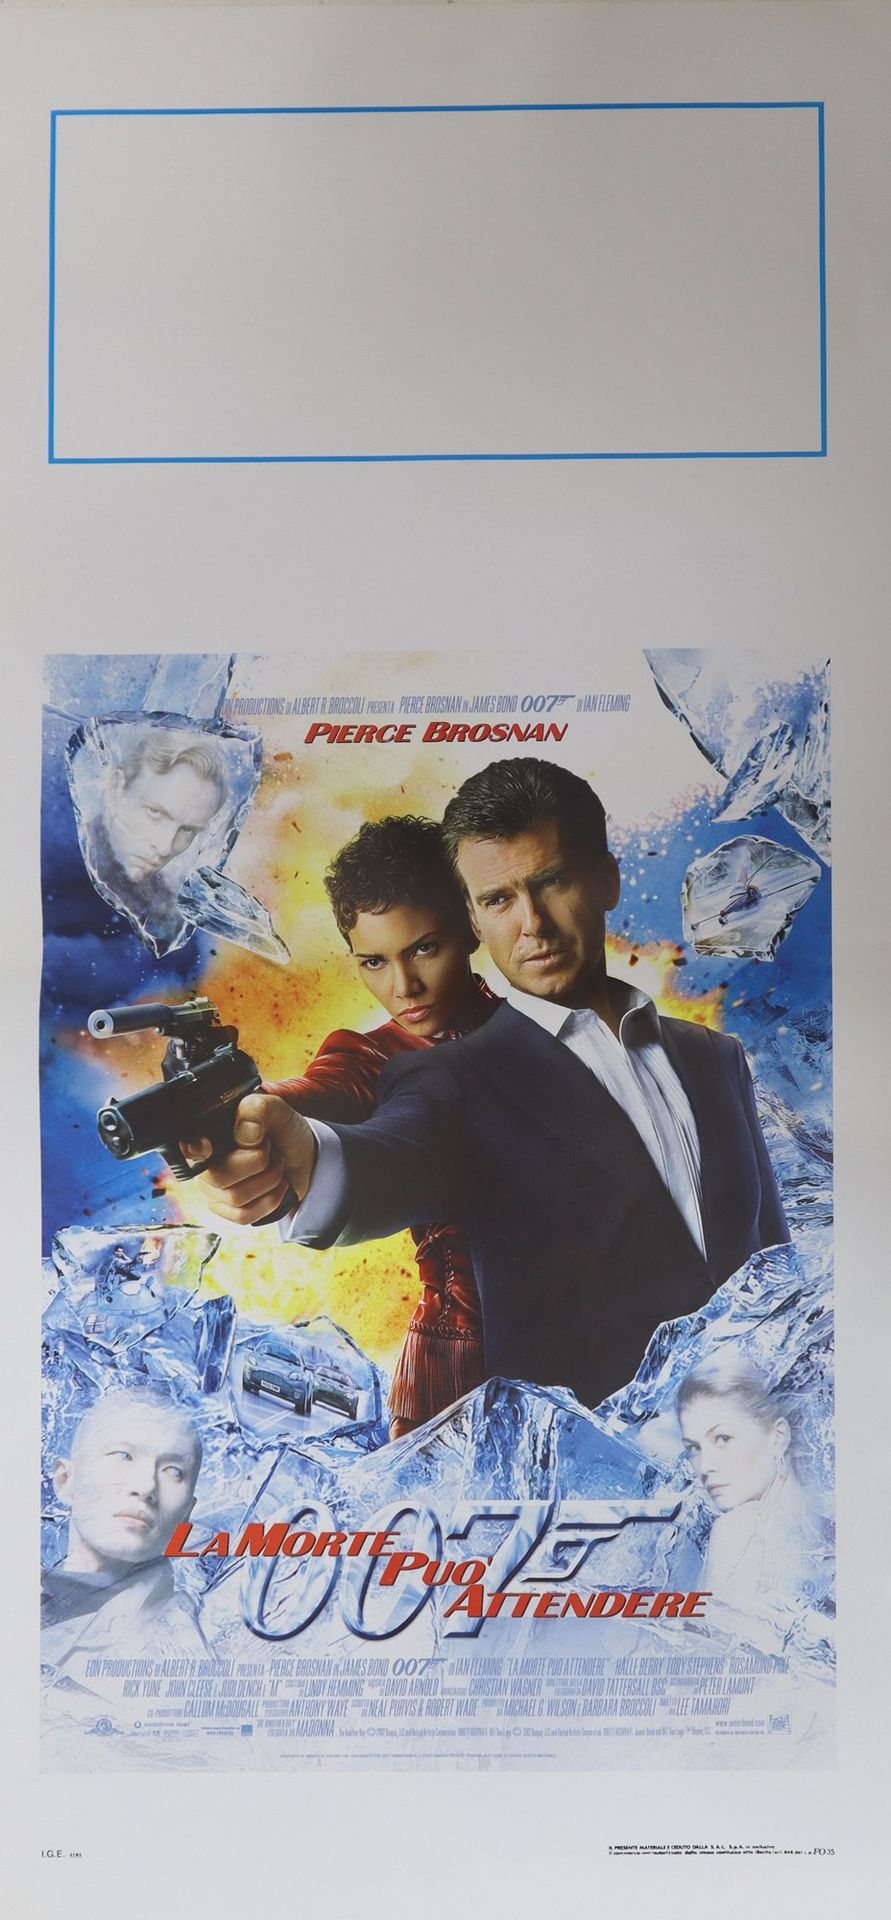 Null 电影海报 "007死亡可以等待"，2002年 70厘米 x 33厘米 使用痕迹正常，日期在中心下方